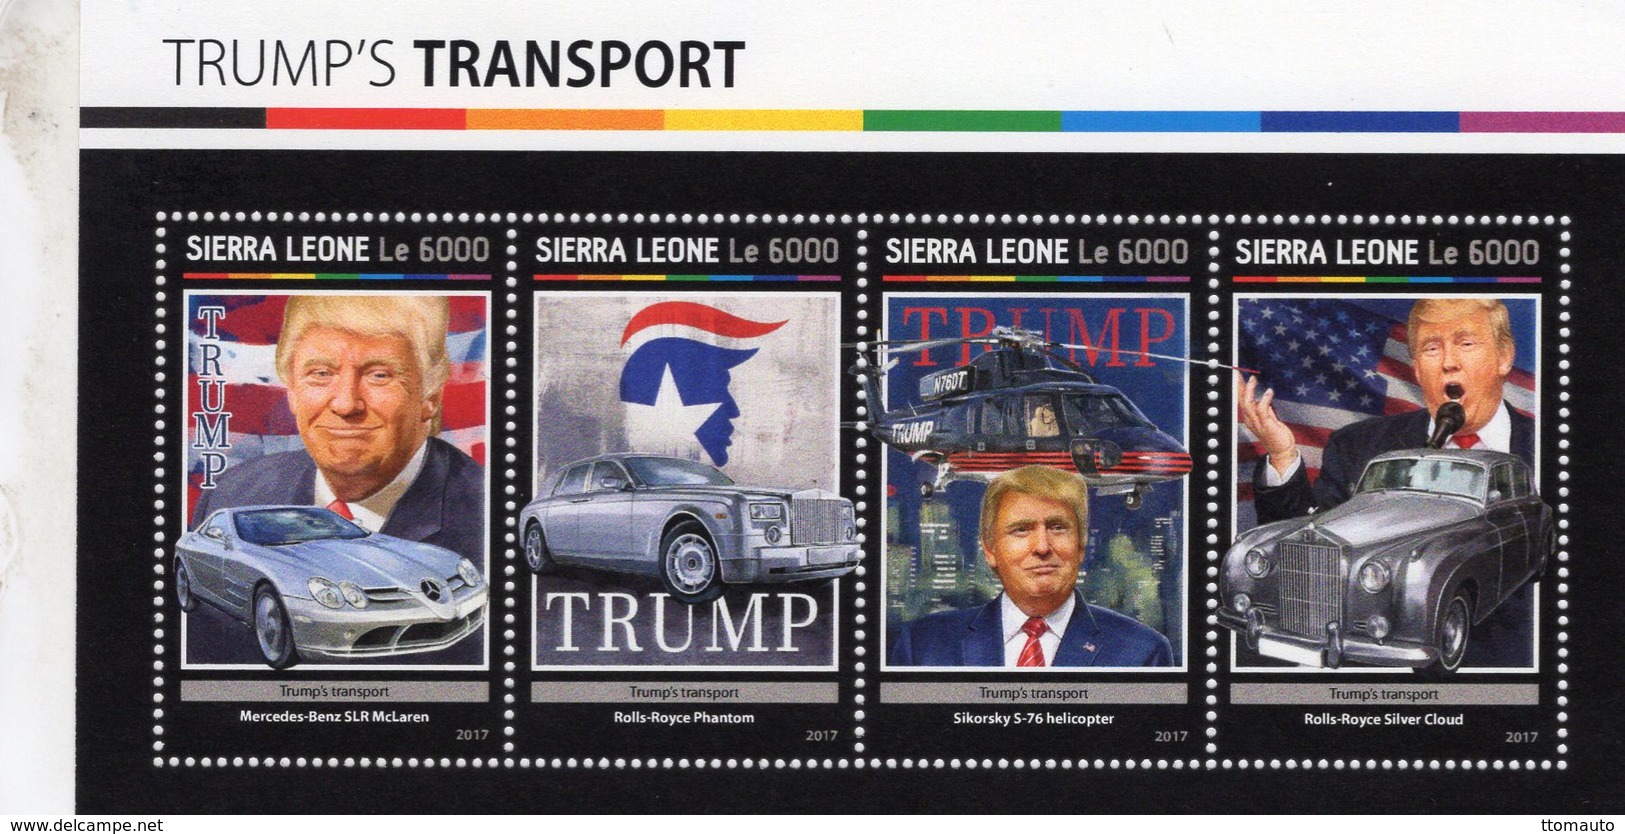 Sierra Leone 2017  - Donald Trump's Transport  -  Mercedes - Rolls-Royce  - 4v Sheet Neuf/MNH - Voitures